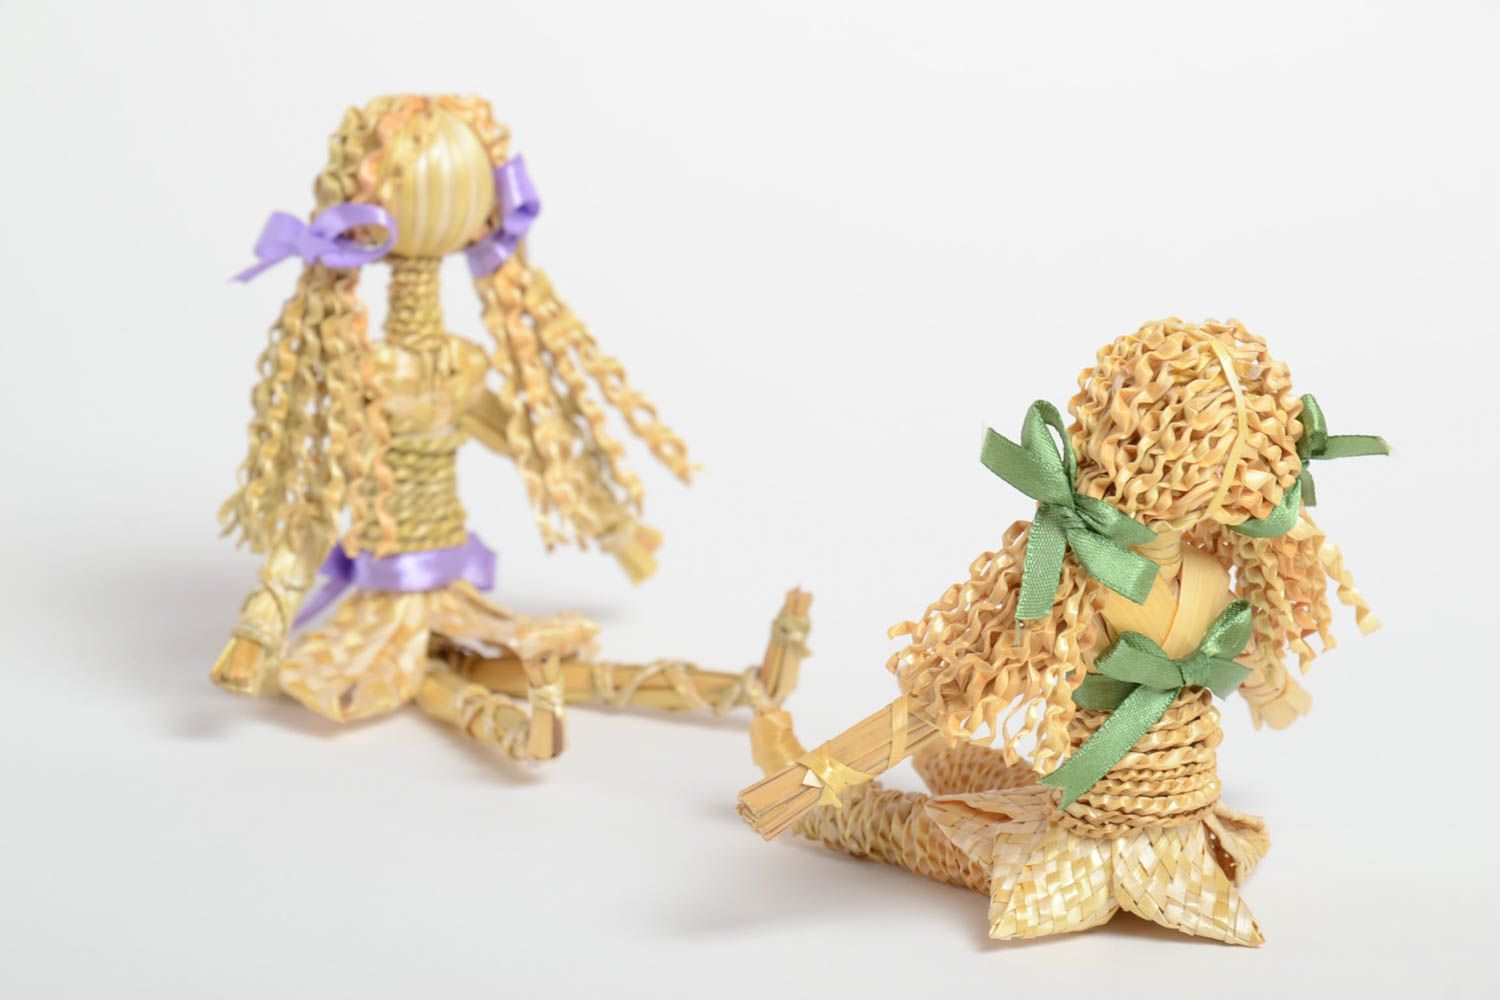 Woven handmade dolls unusual interior decor stylish toys made of straw 2 pieces photo 4